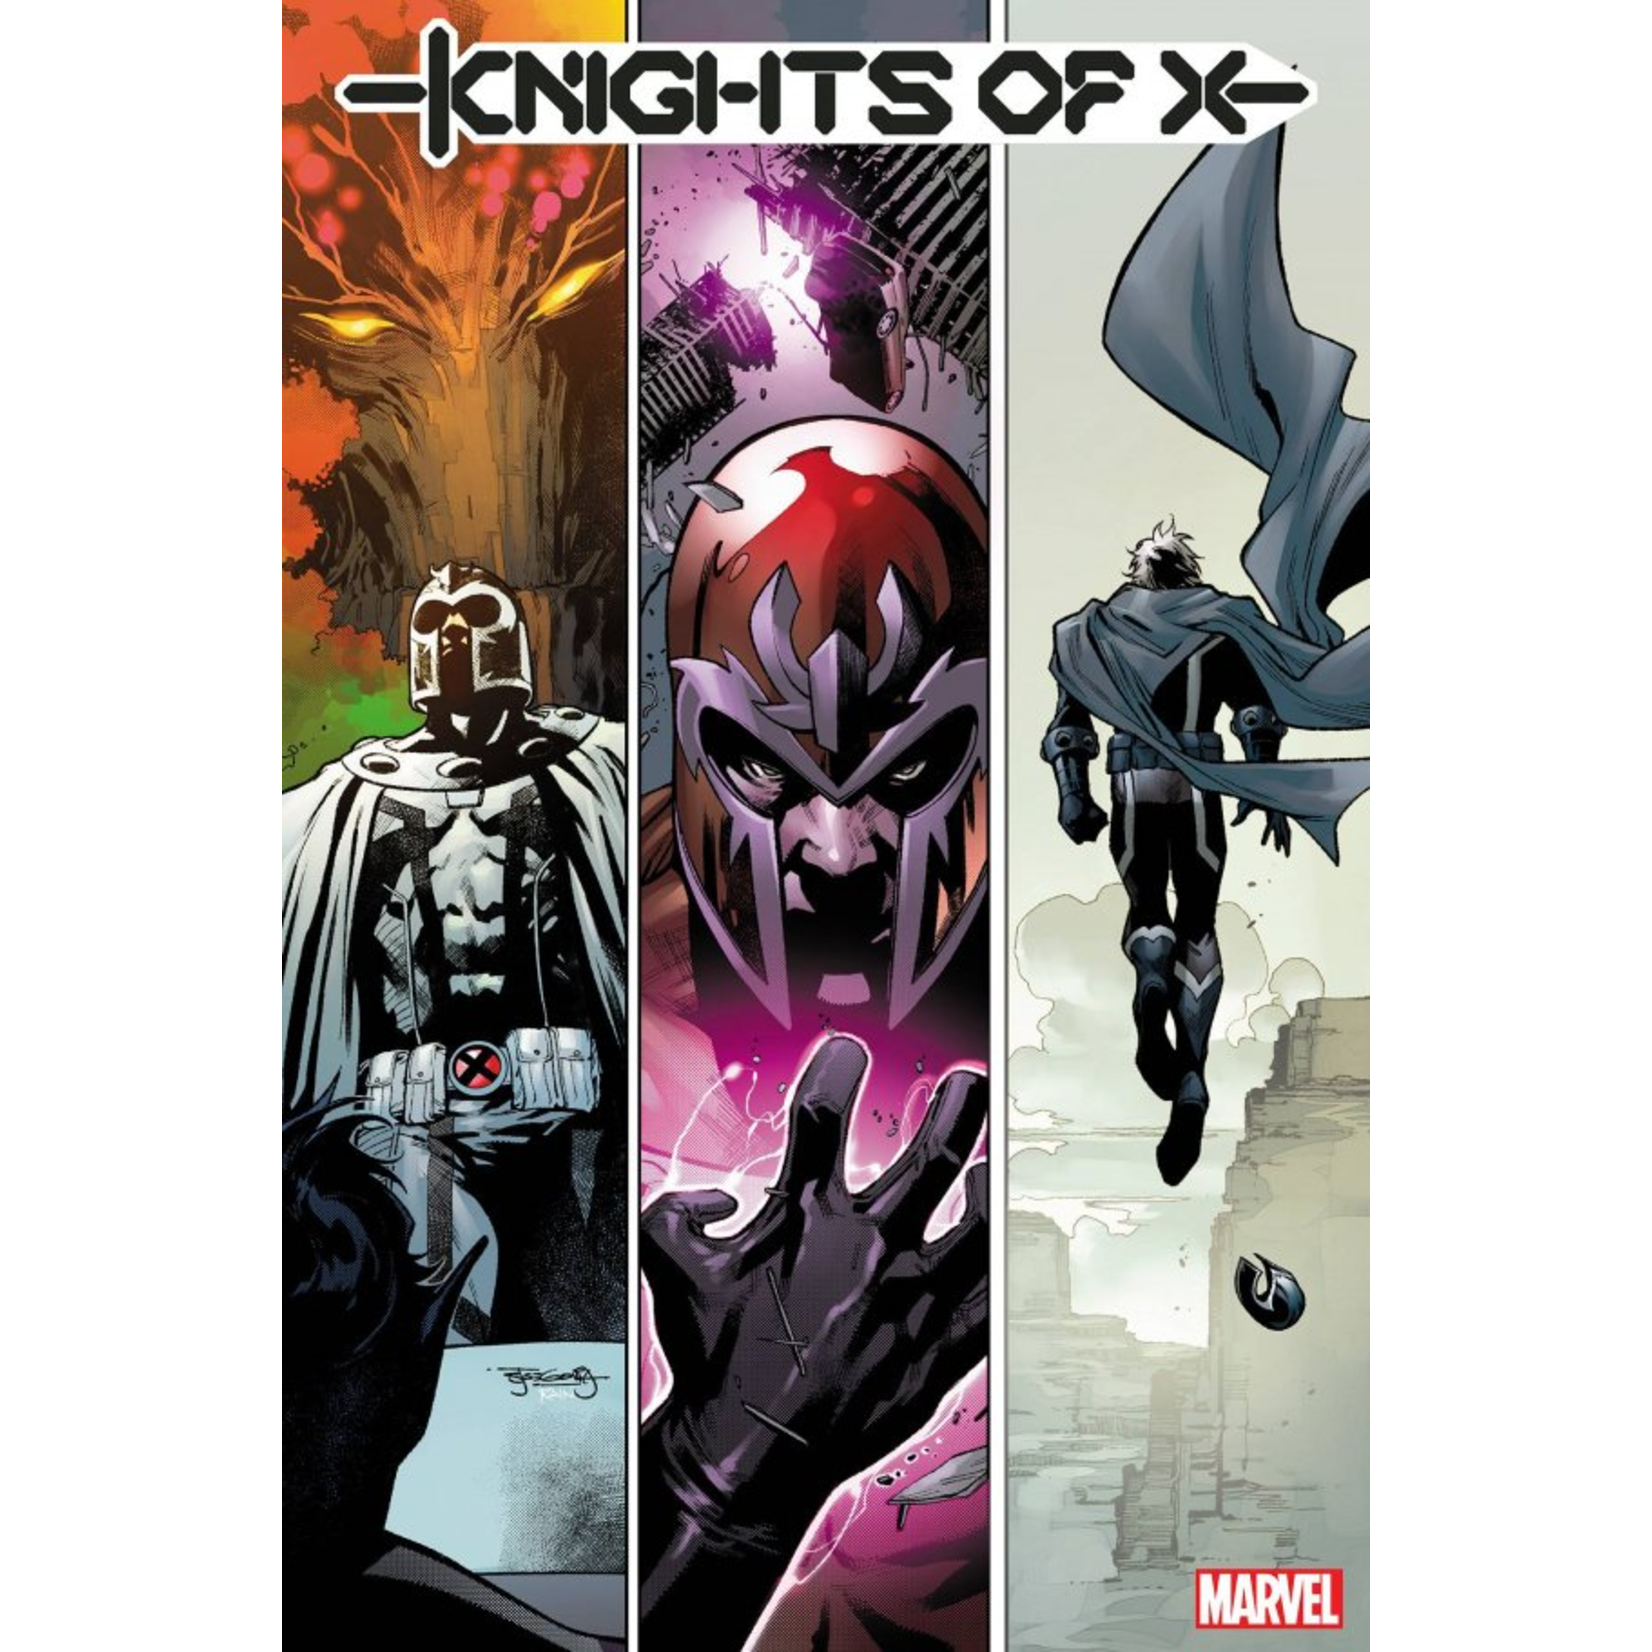 Marvel Knights of X #1 Segovia Promo Variant